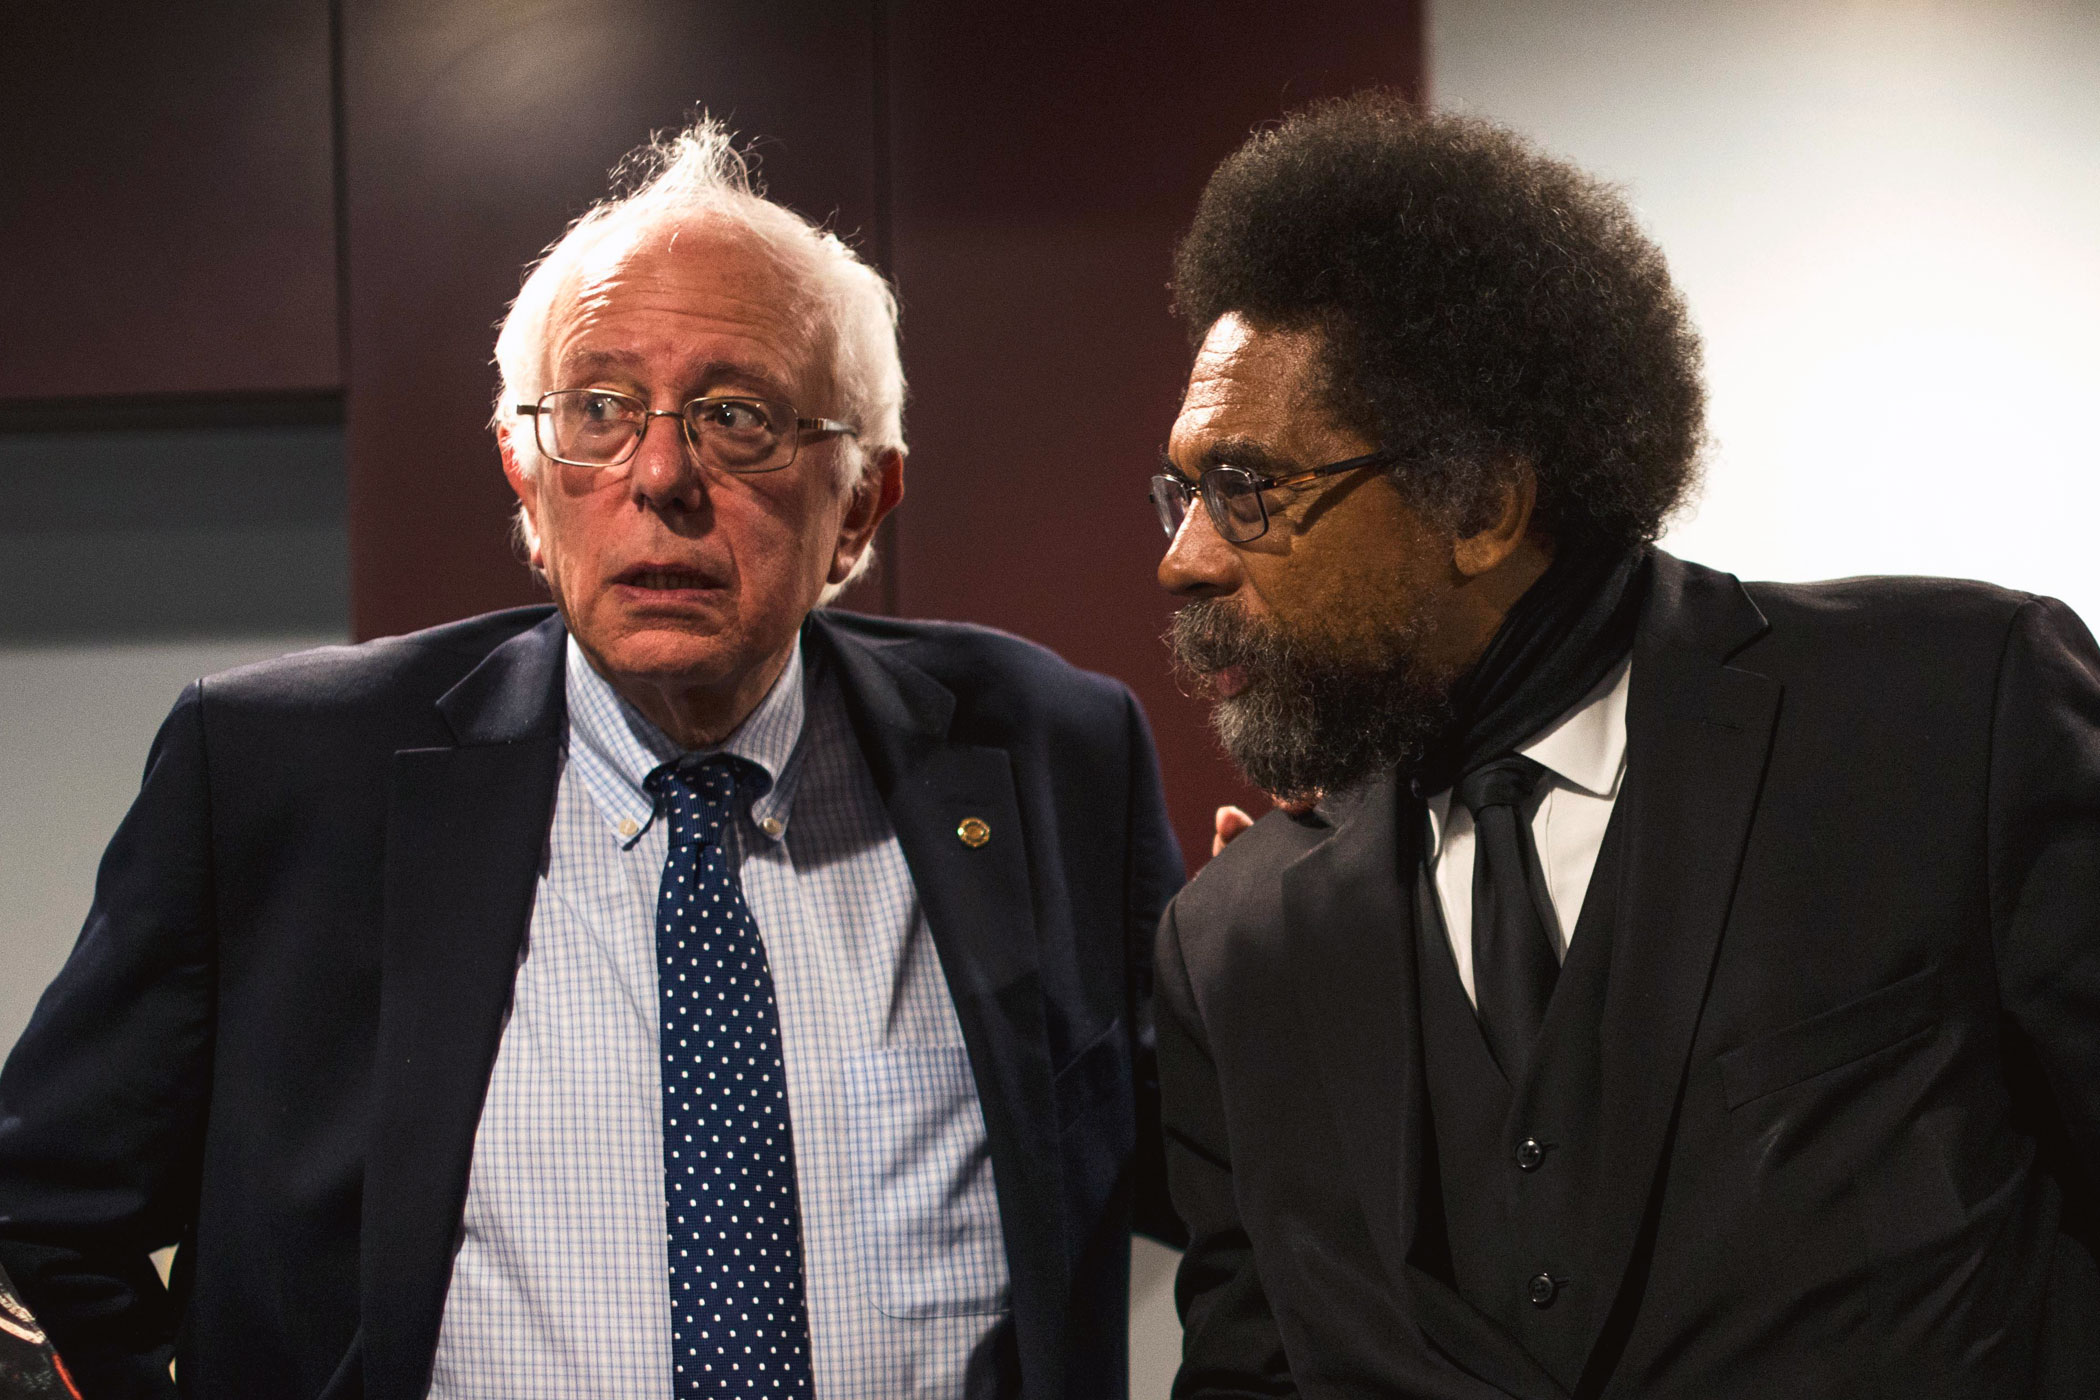 Philosopher and academic Cornel West, right, endorses Vermont Senator Bernie Sanders (I-VT).